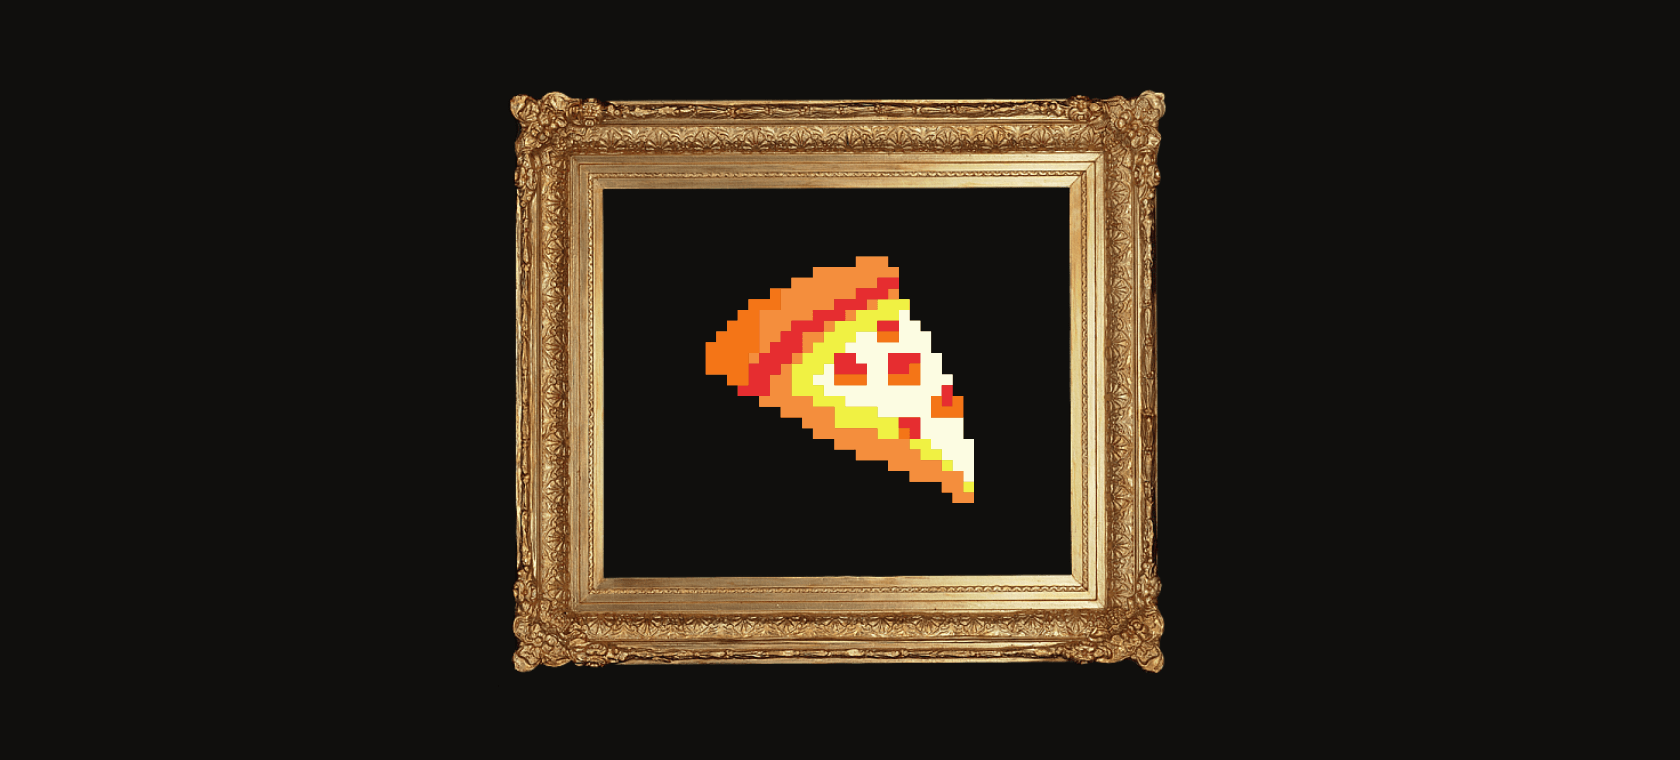 Pixel illustration of NFT pizza artwork in a gold antique picture frame.